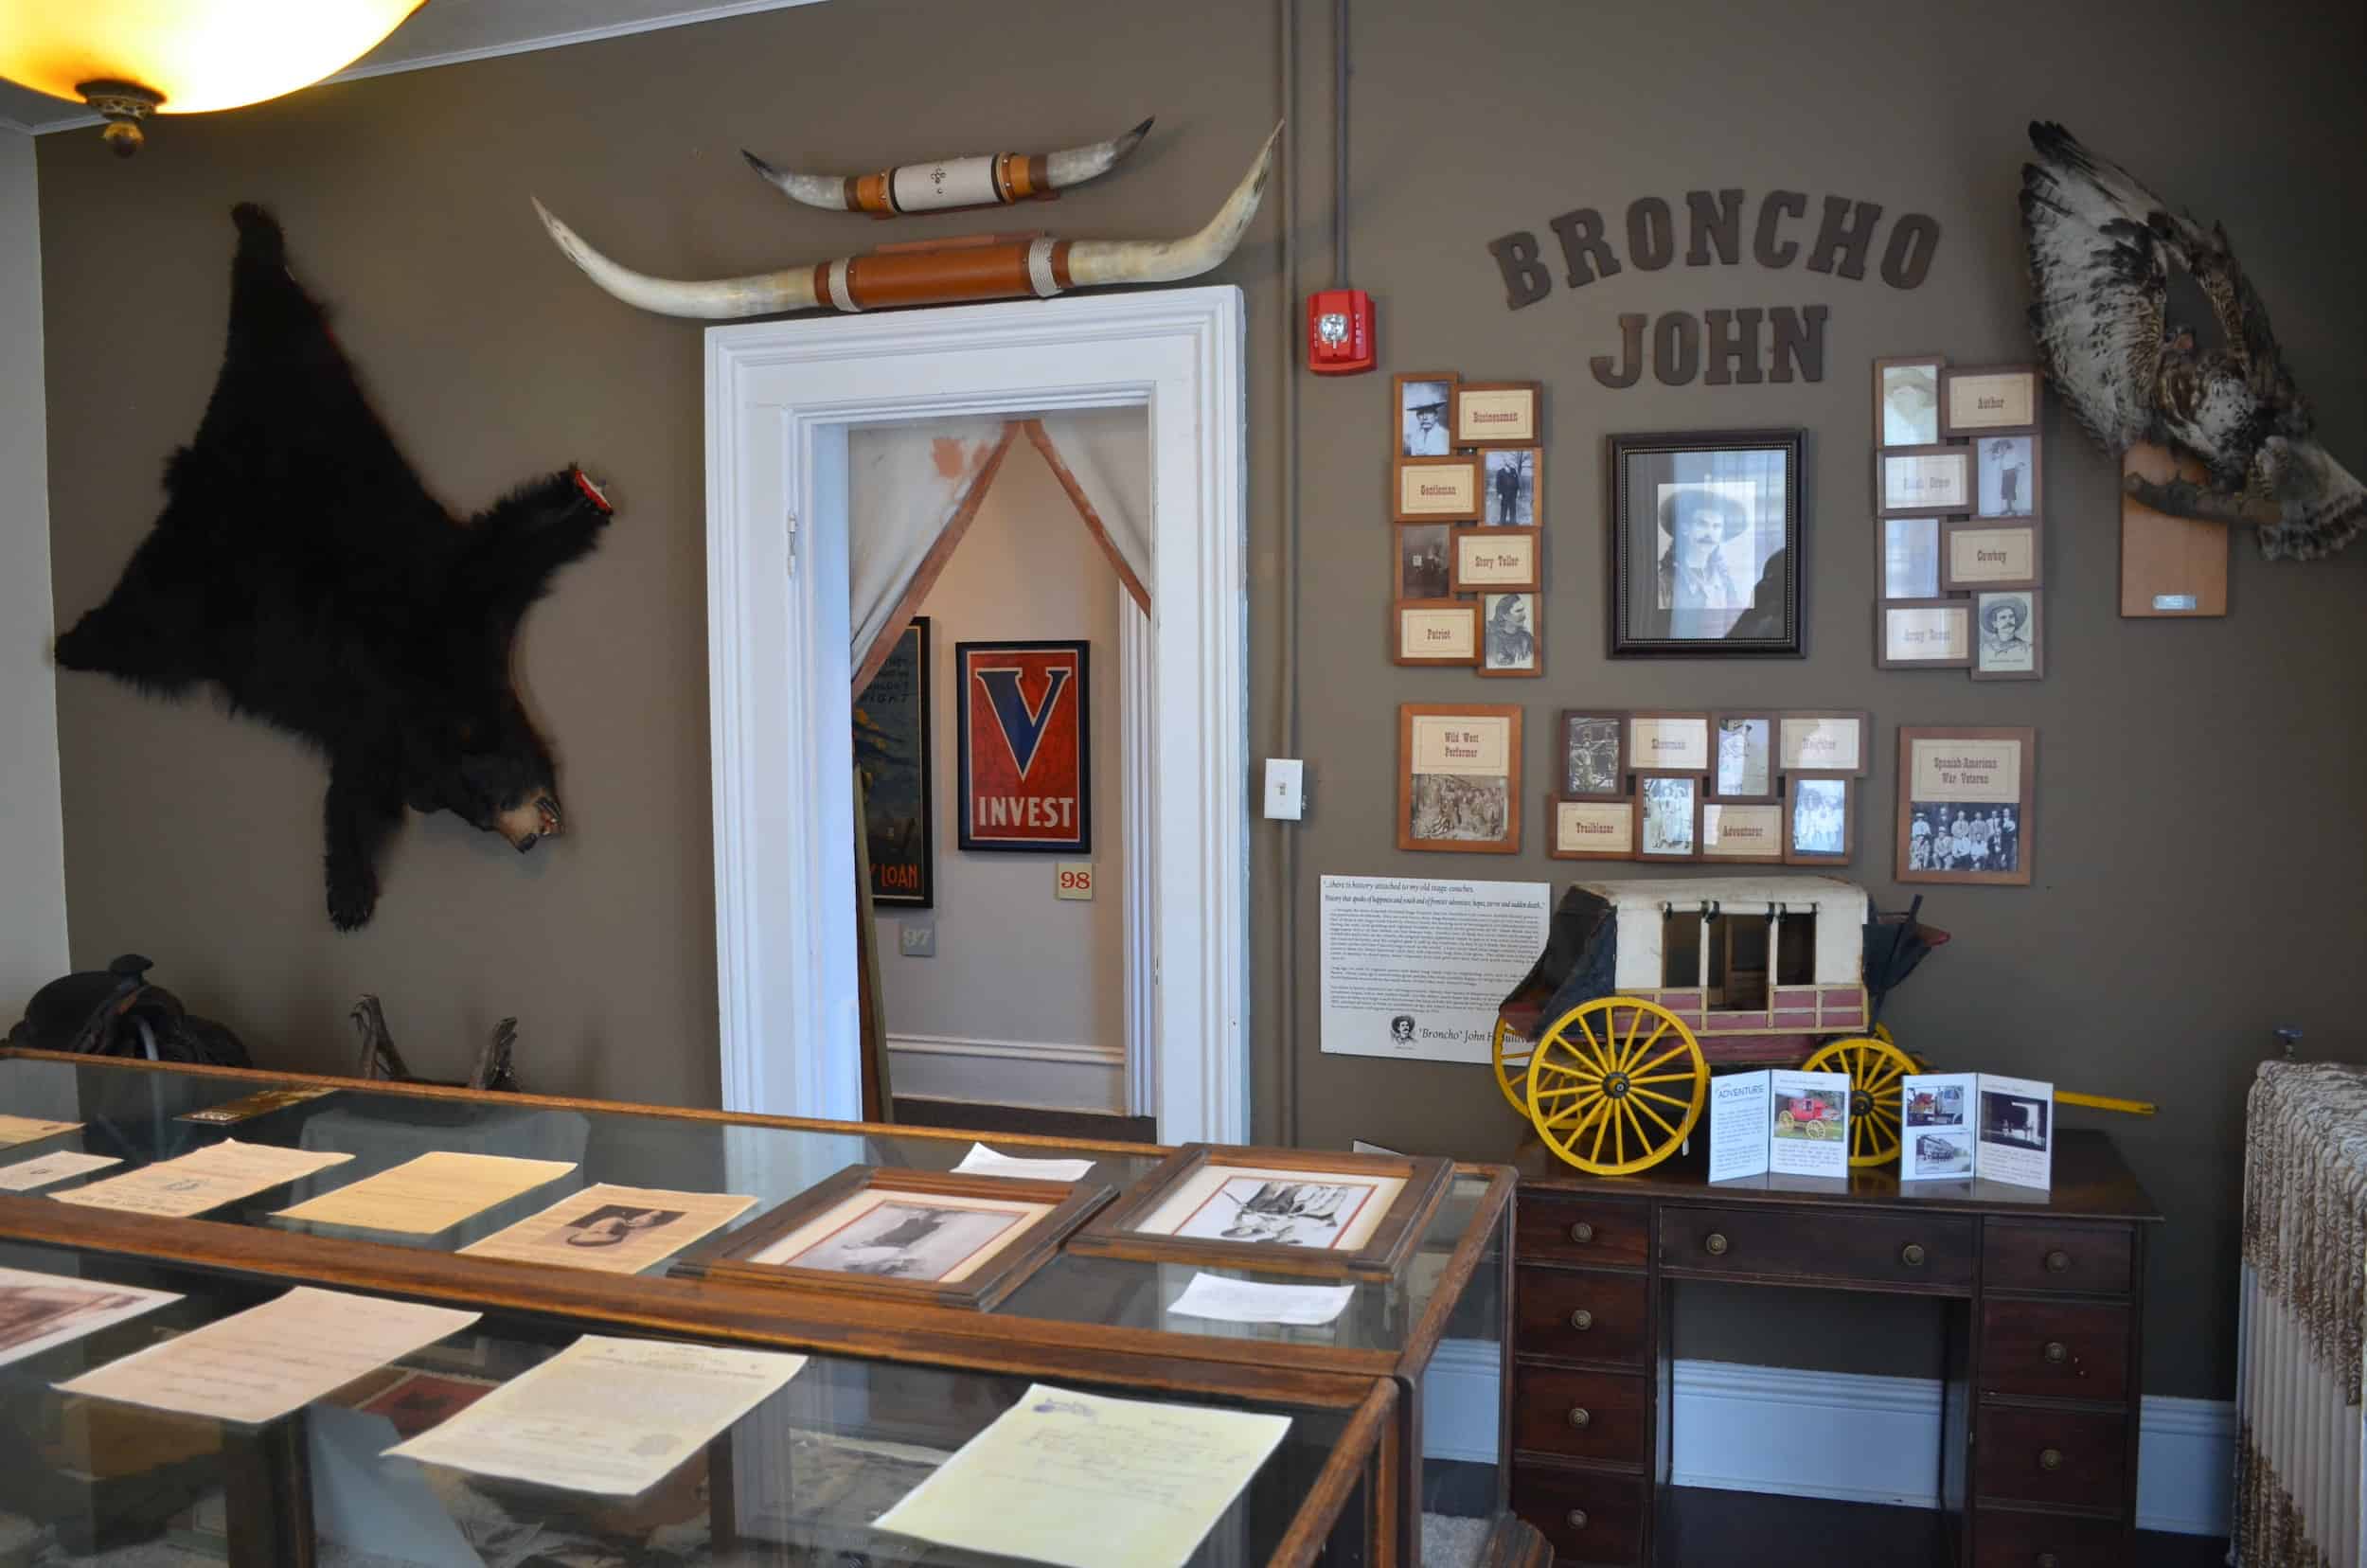 Broncho John Sullivan exhibit at the Porter County Museum in Valparaiso, Indiana